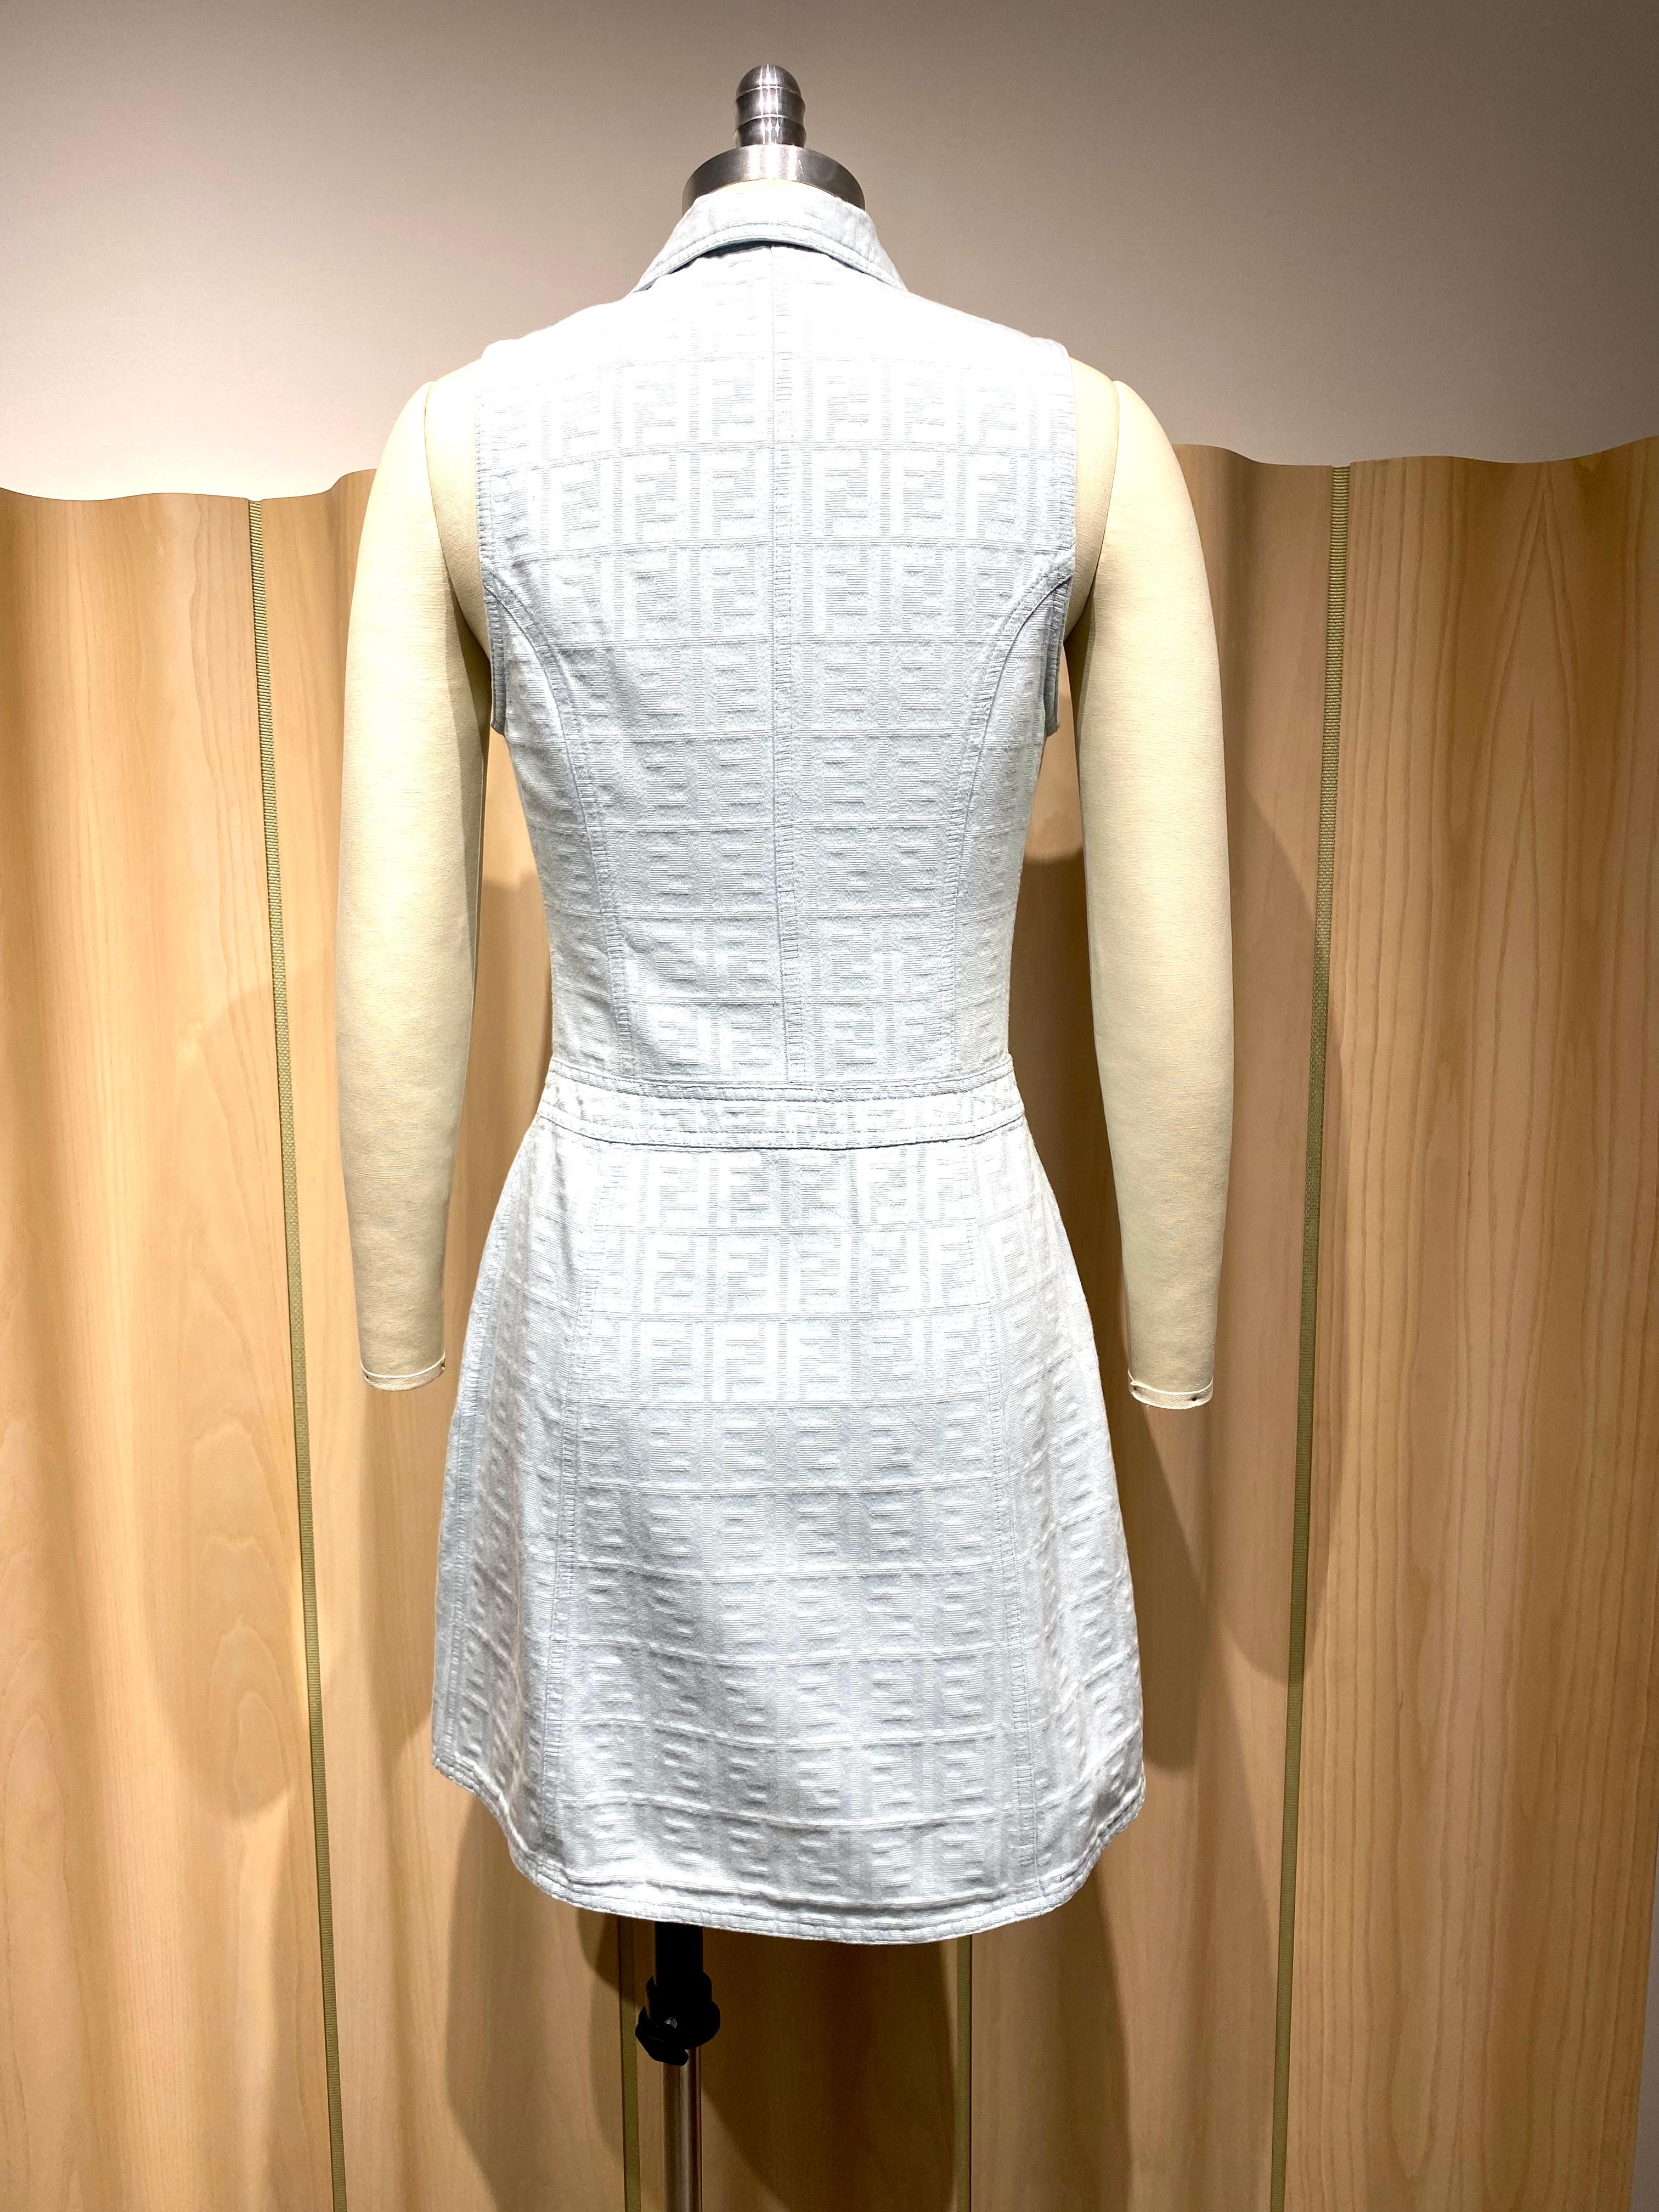 90s Fendi Blue cotton fendi logo mini wrap dress.
Size: 4
Bust 34” / Waist 28” / Hip 34” / Dress length 33”